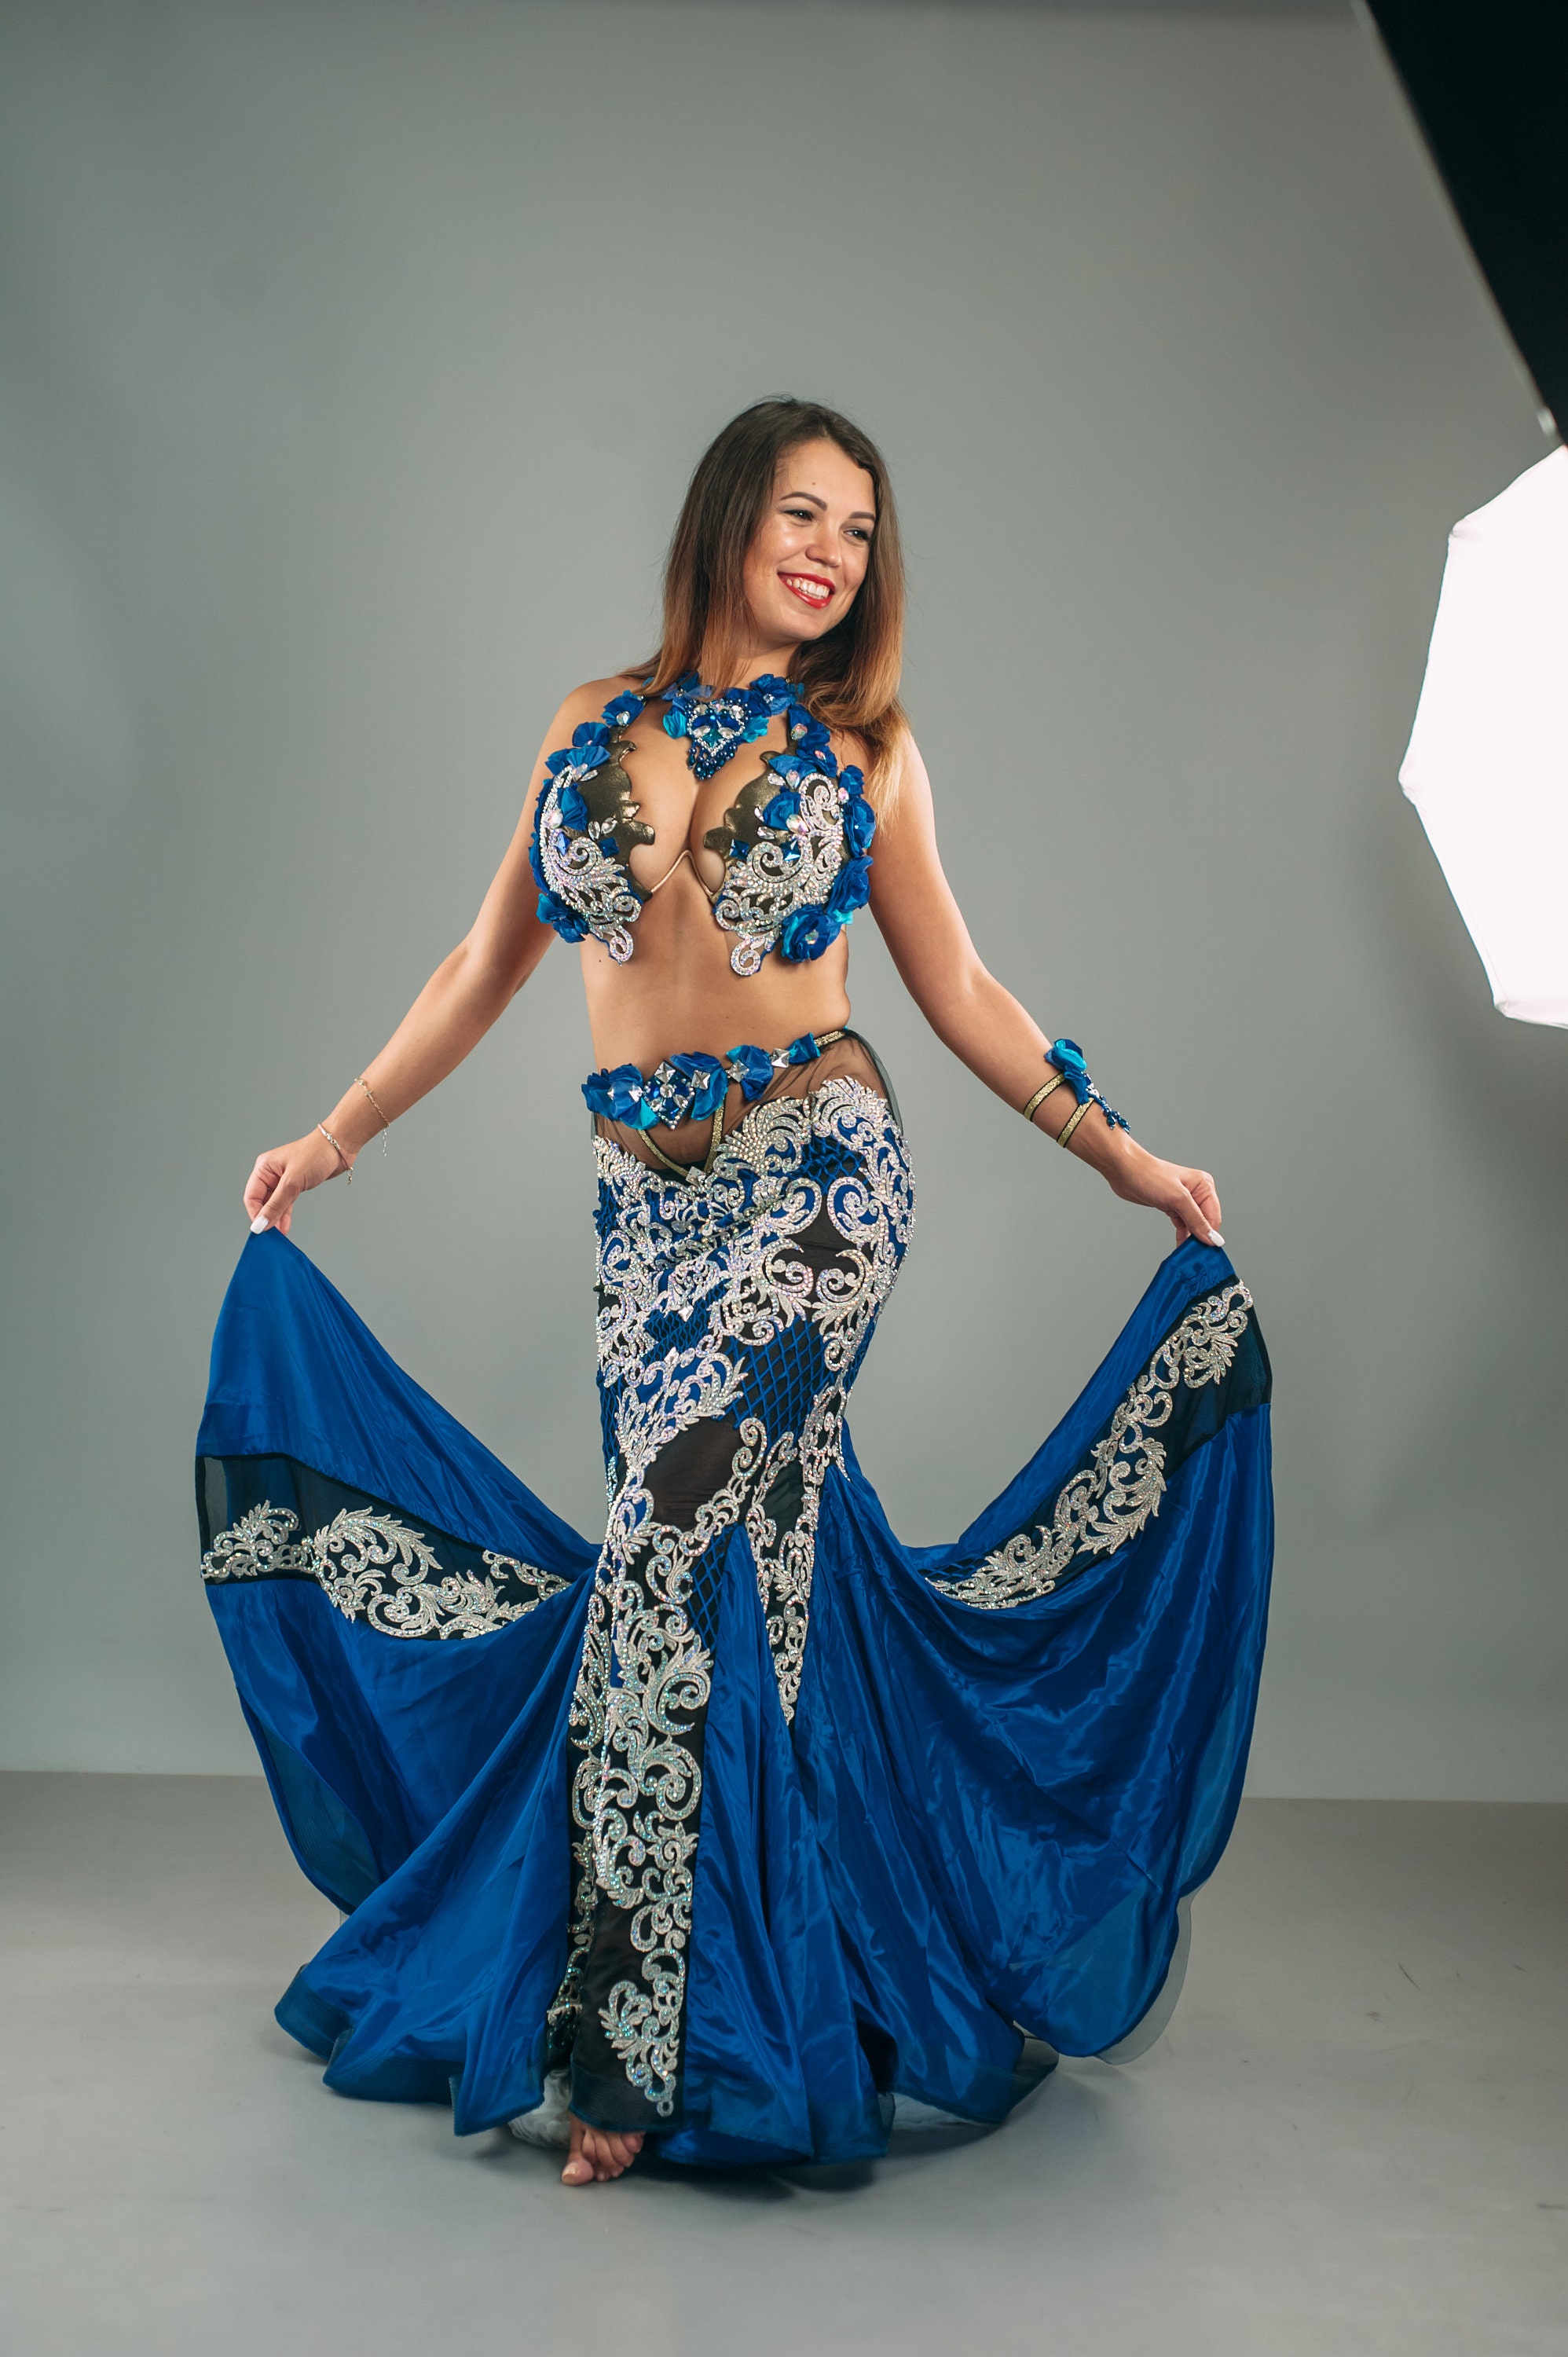 Costume de danse orientale couture bleu pétrole - 189,90 €